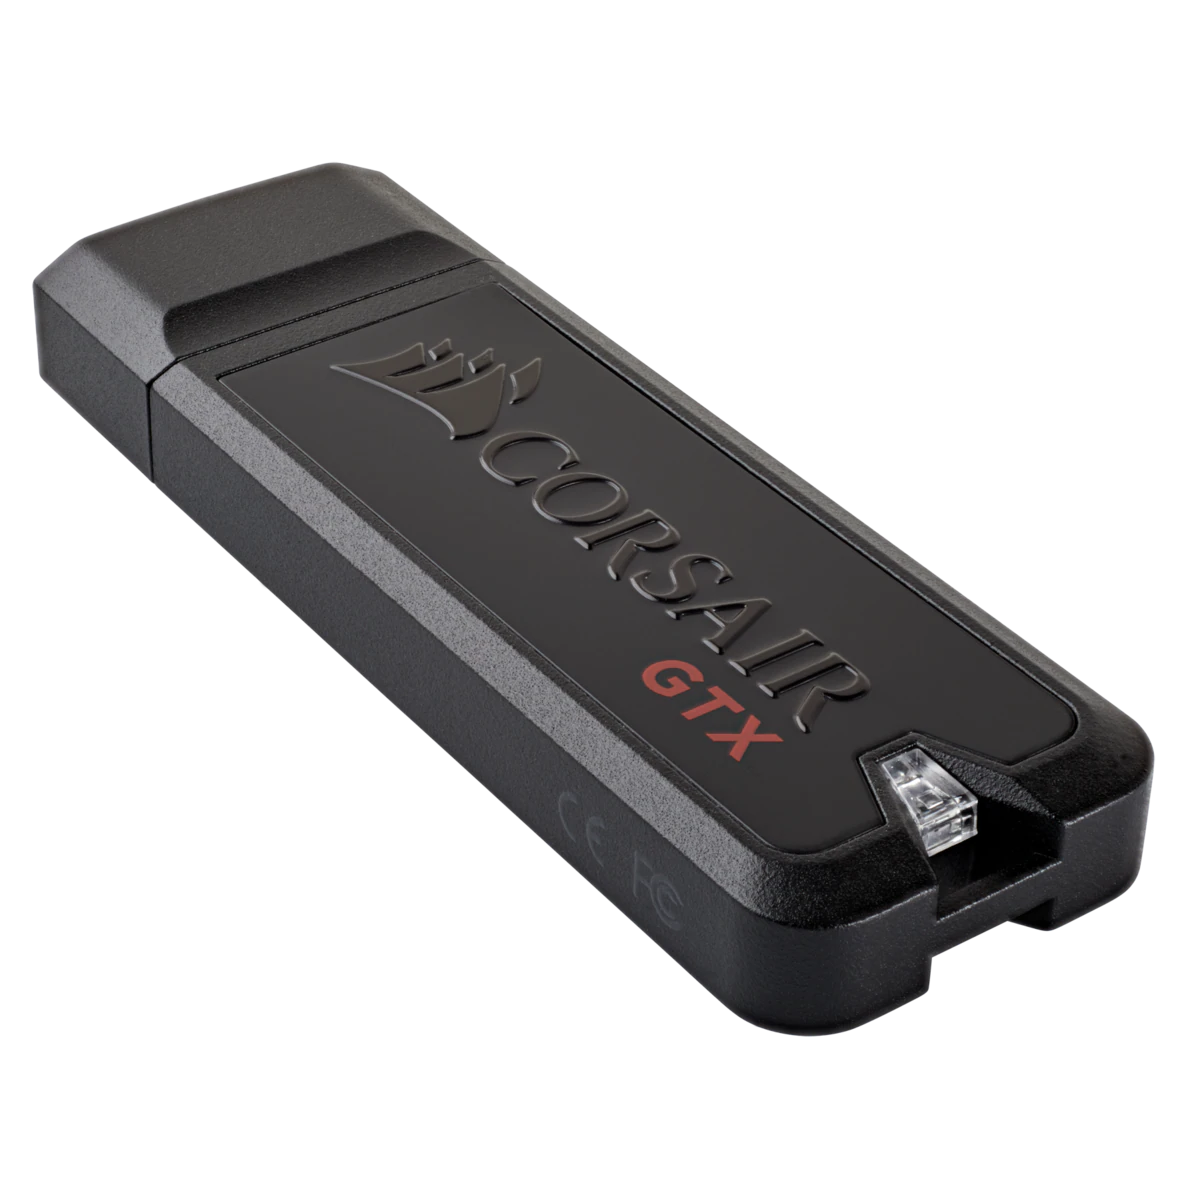 Corsair Flash Voyager® GTX USB 3.1 128GB Premium Flash Drive